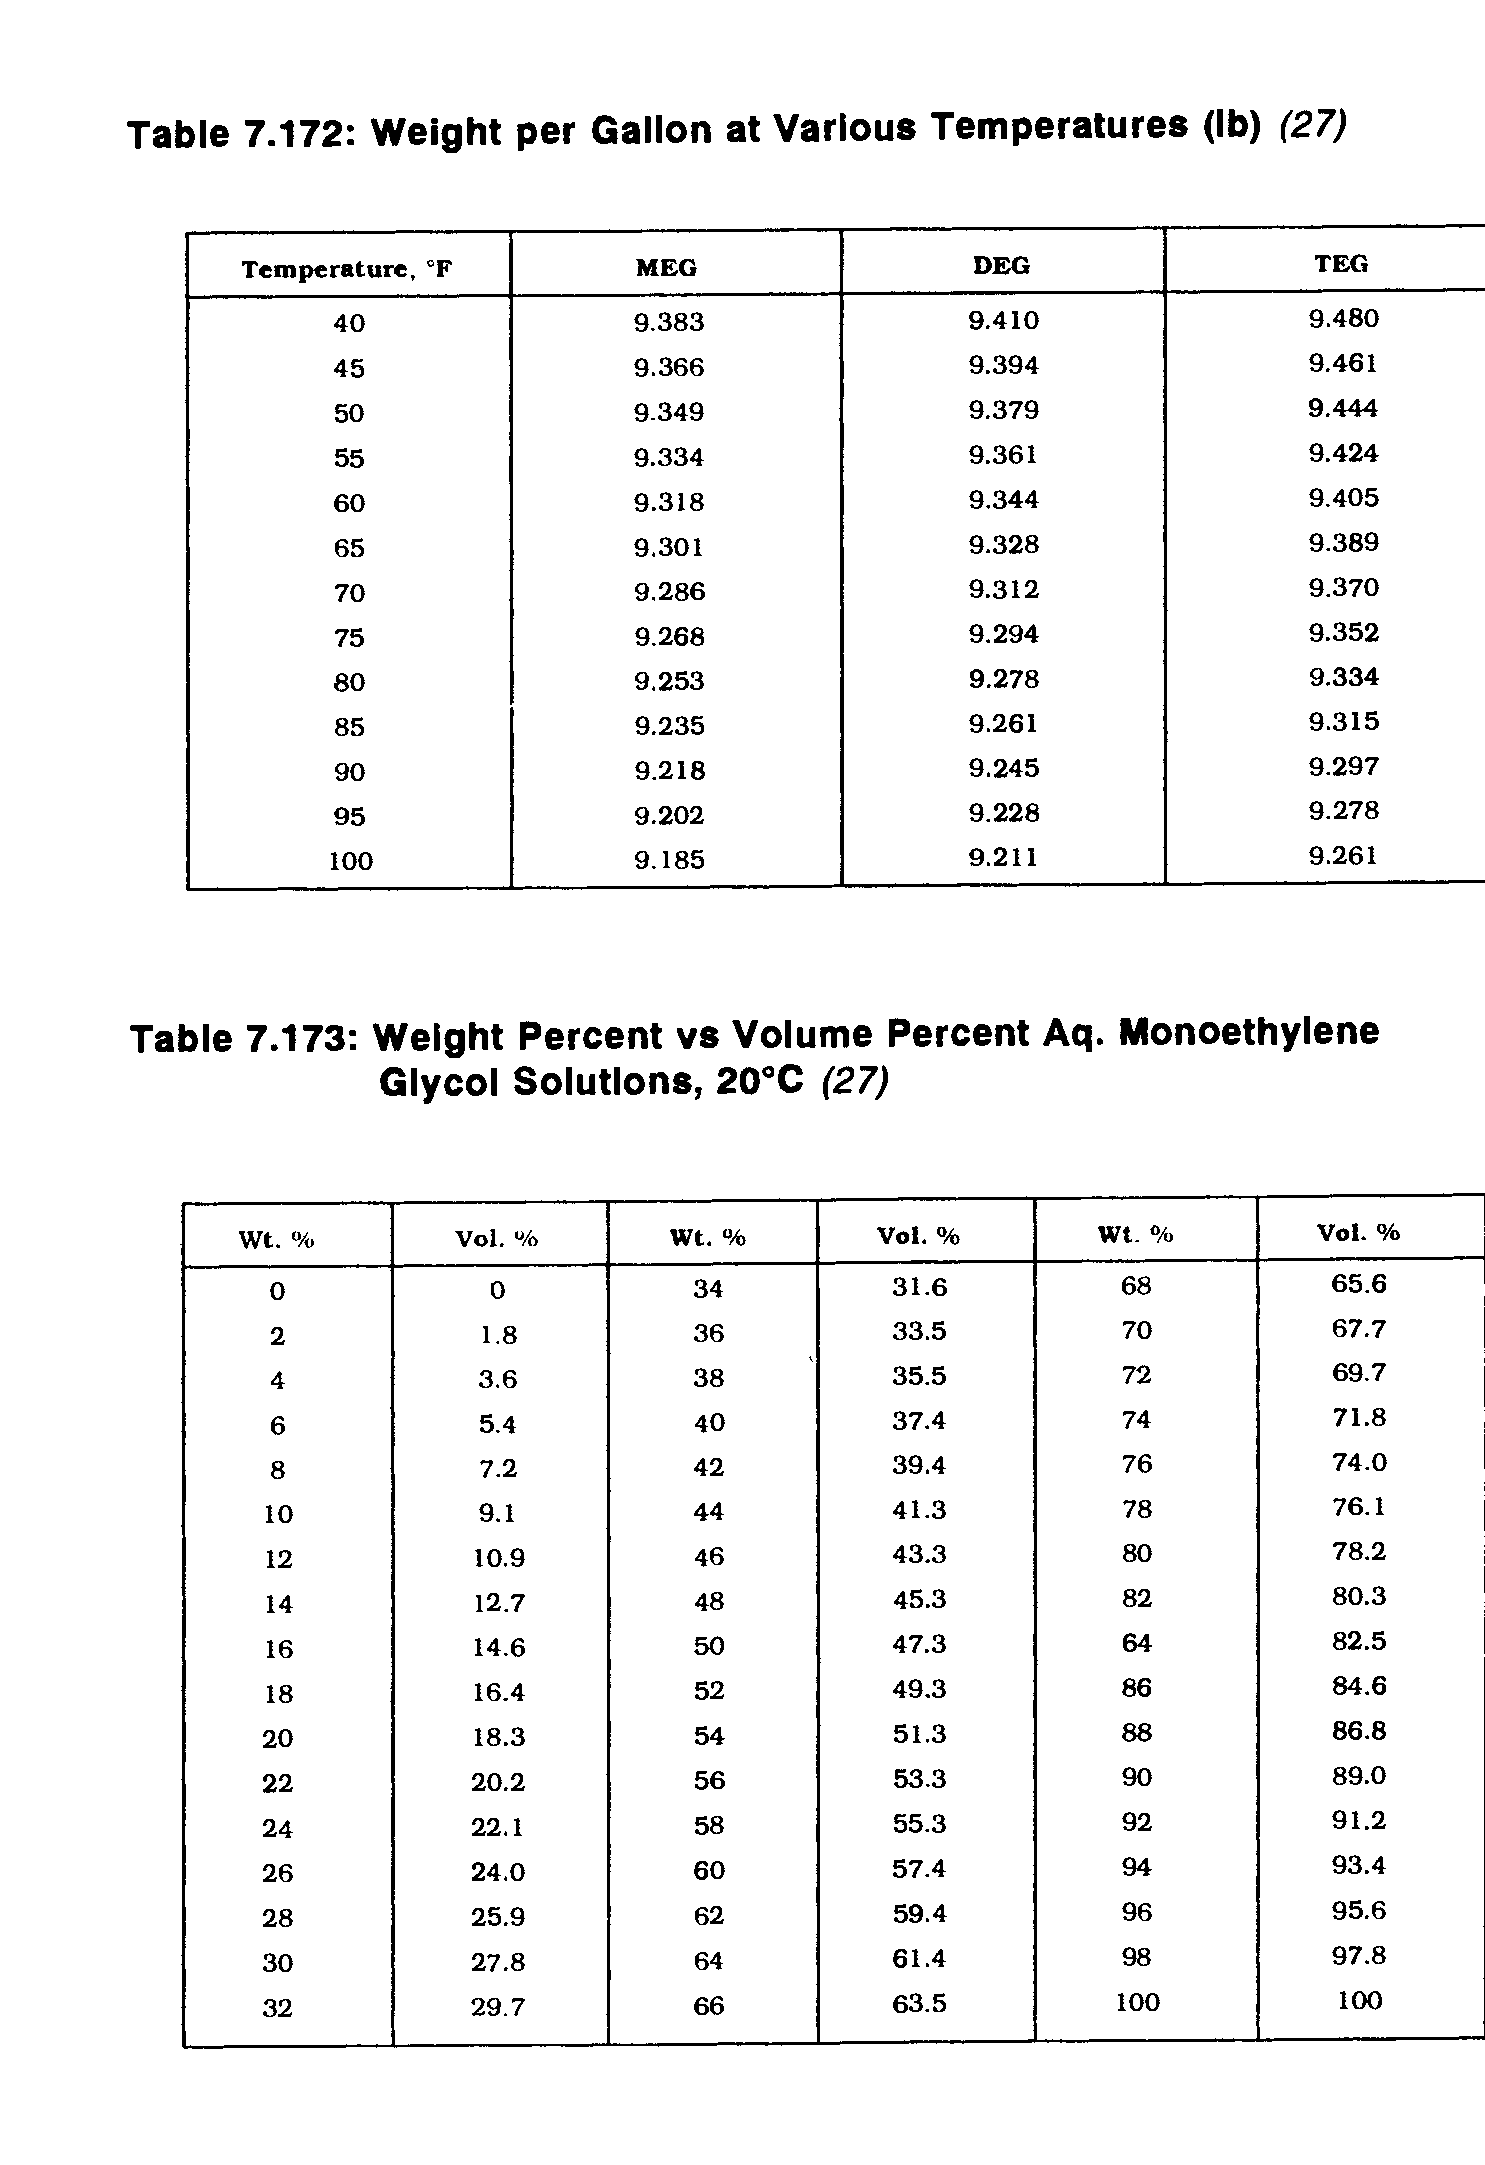 Table 7.173 Weight Percent vs Volume Percent Aq. Monoethylene Glycol Solutions, 20°C (27)...